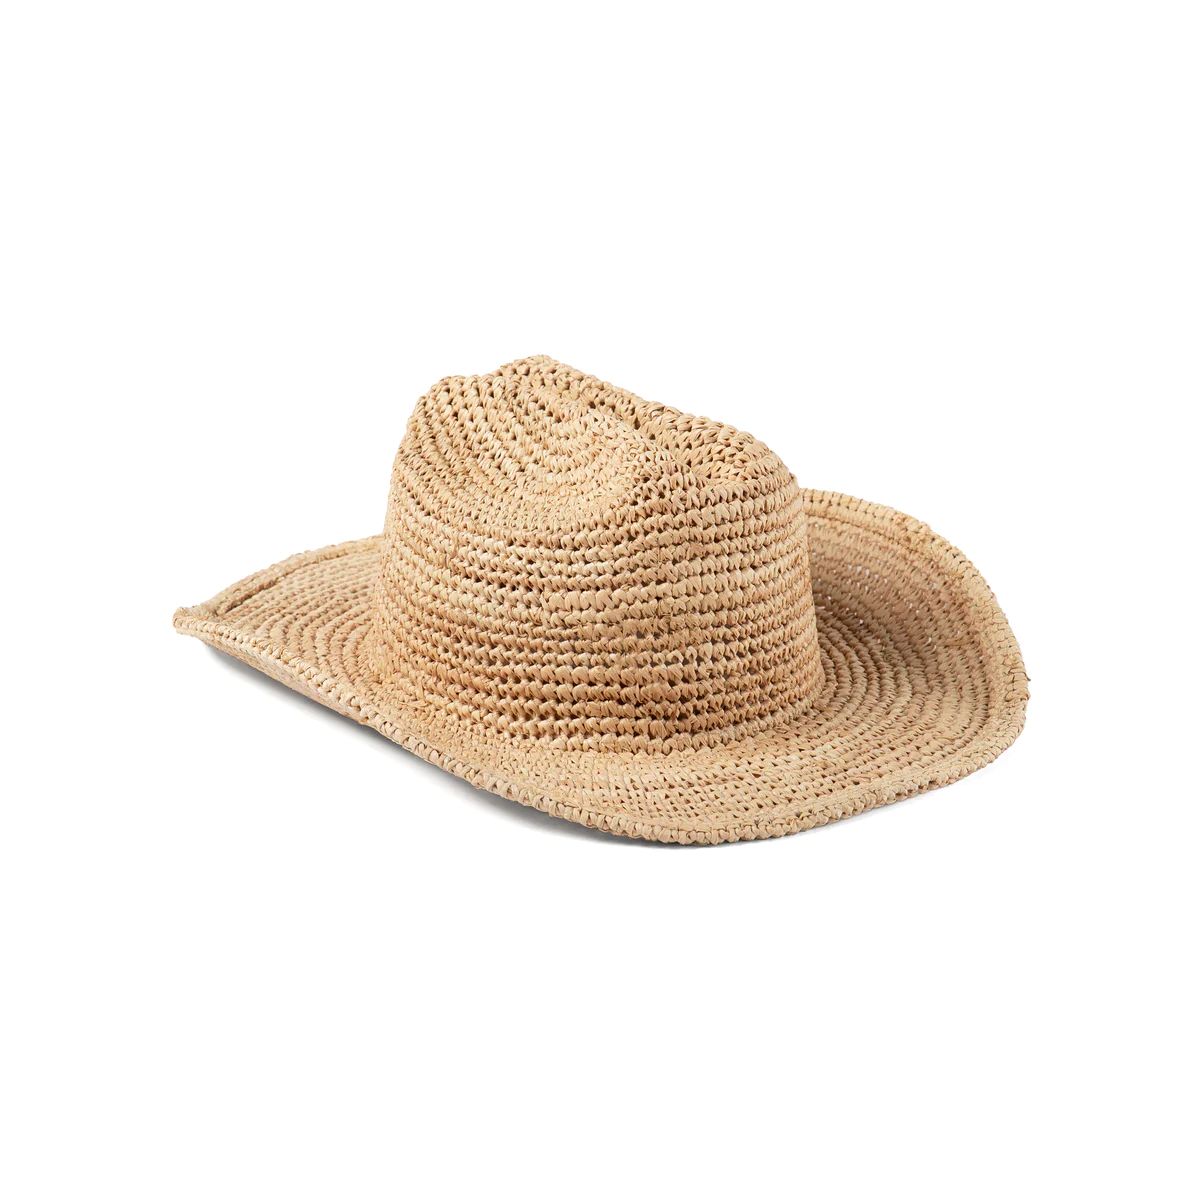 Raffia Cowboy - Straw Cowboy Hat in Natural | Lack of Color US | Lack of Color